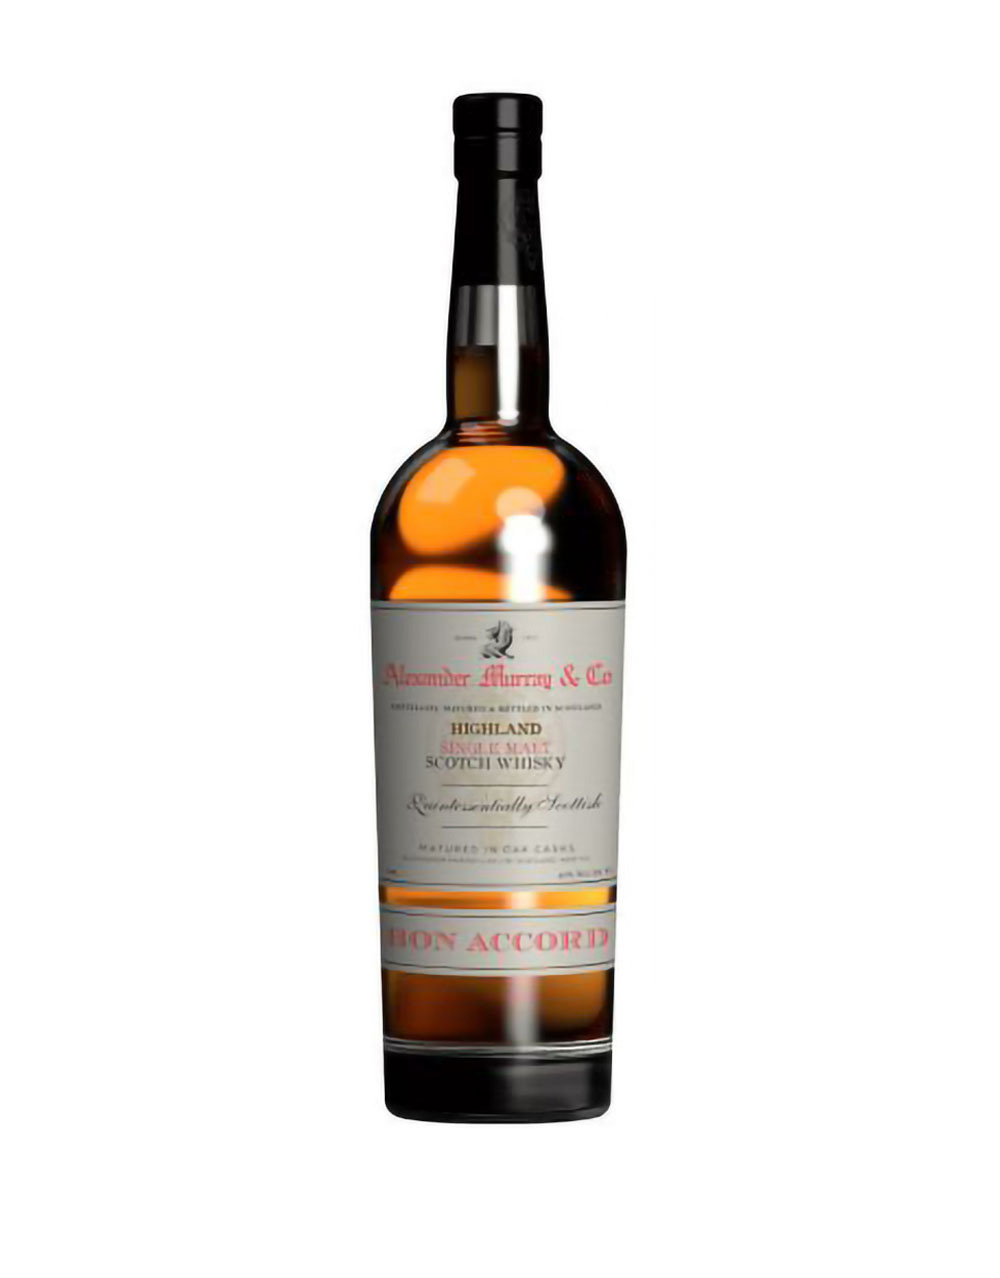 Alexander Murray Bon Accord Single Malt Scotch Whisky